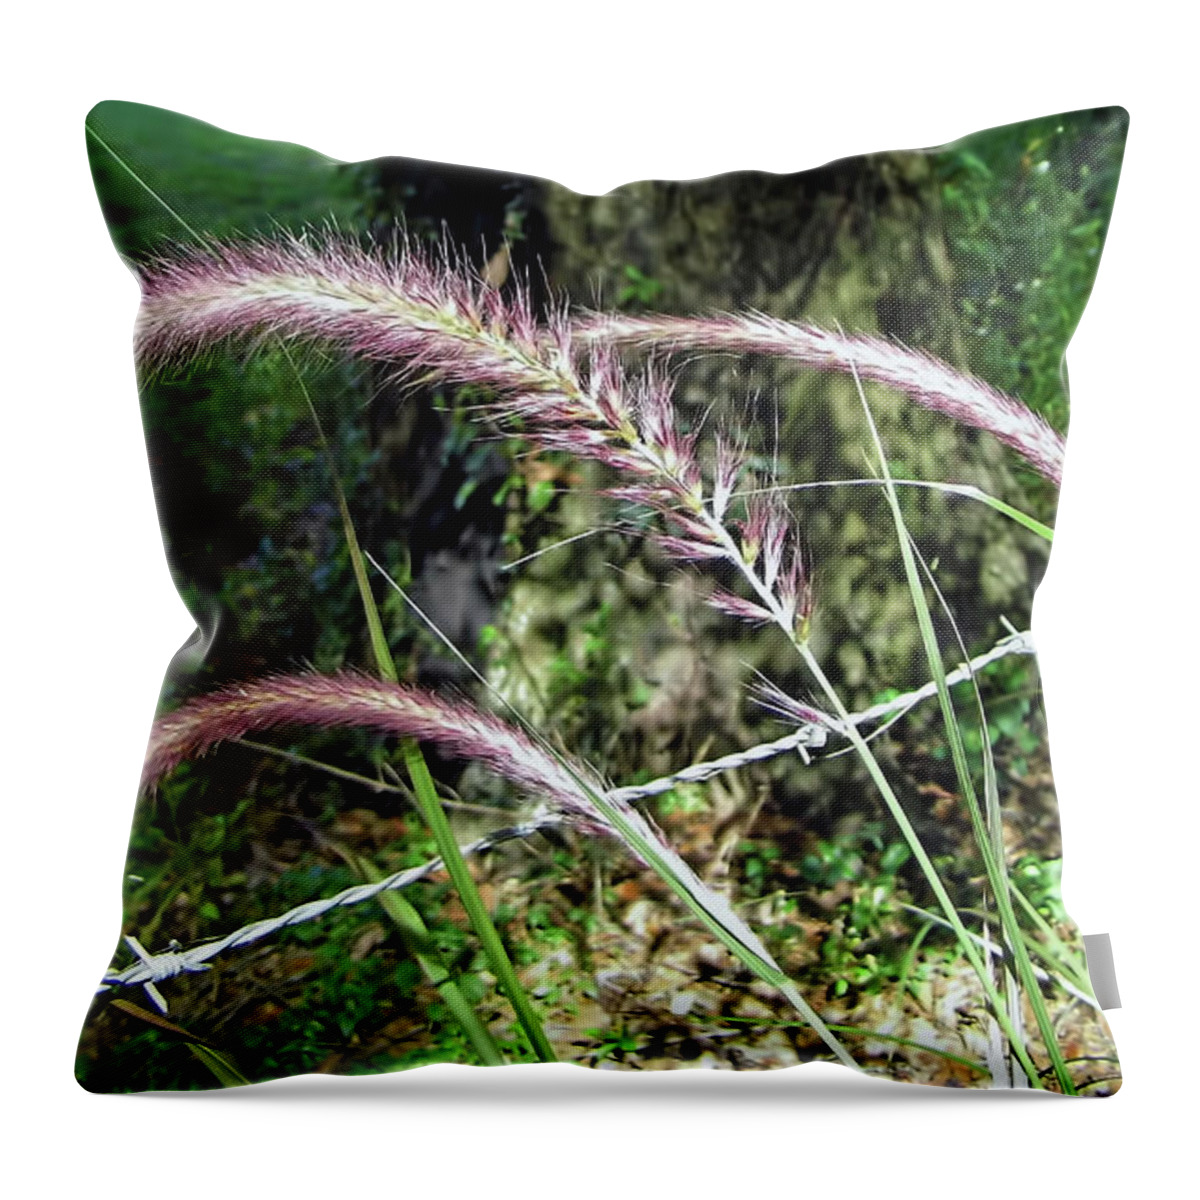 Ornamental Grass Throw Pillow featuring the photograph Purple Fountain Grass by D Hackett